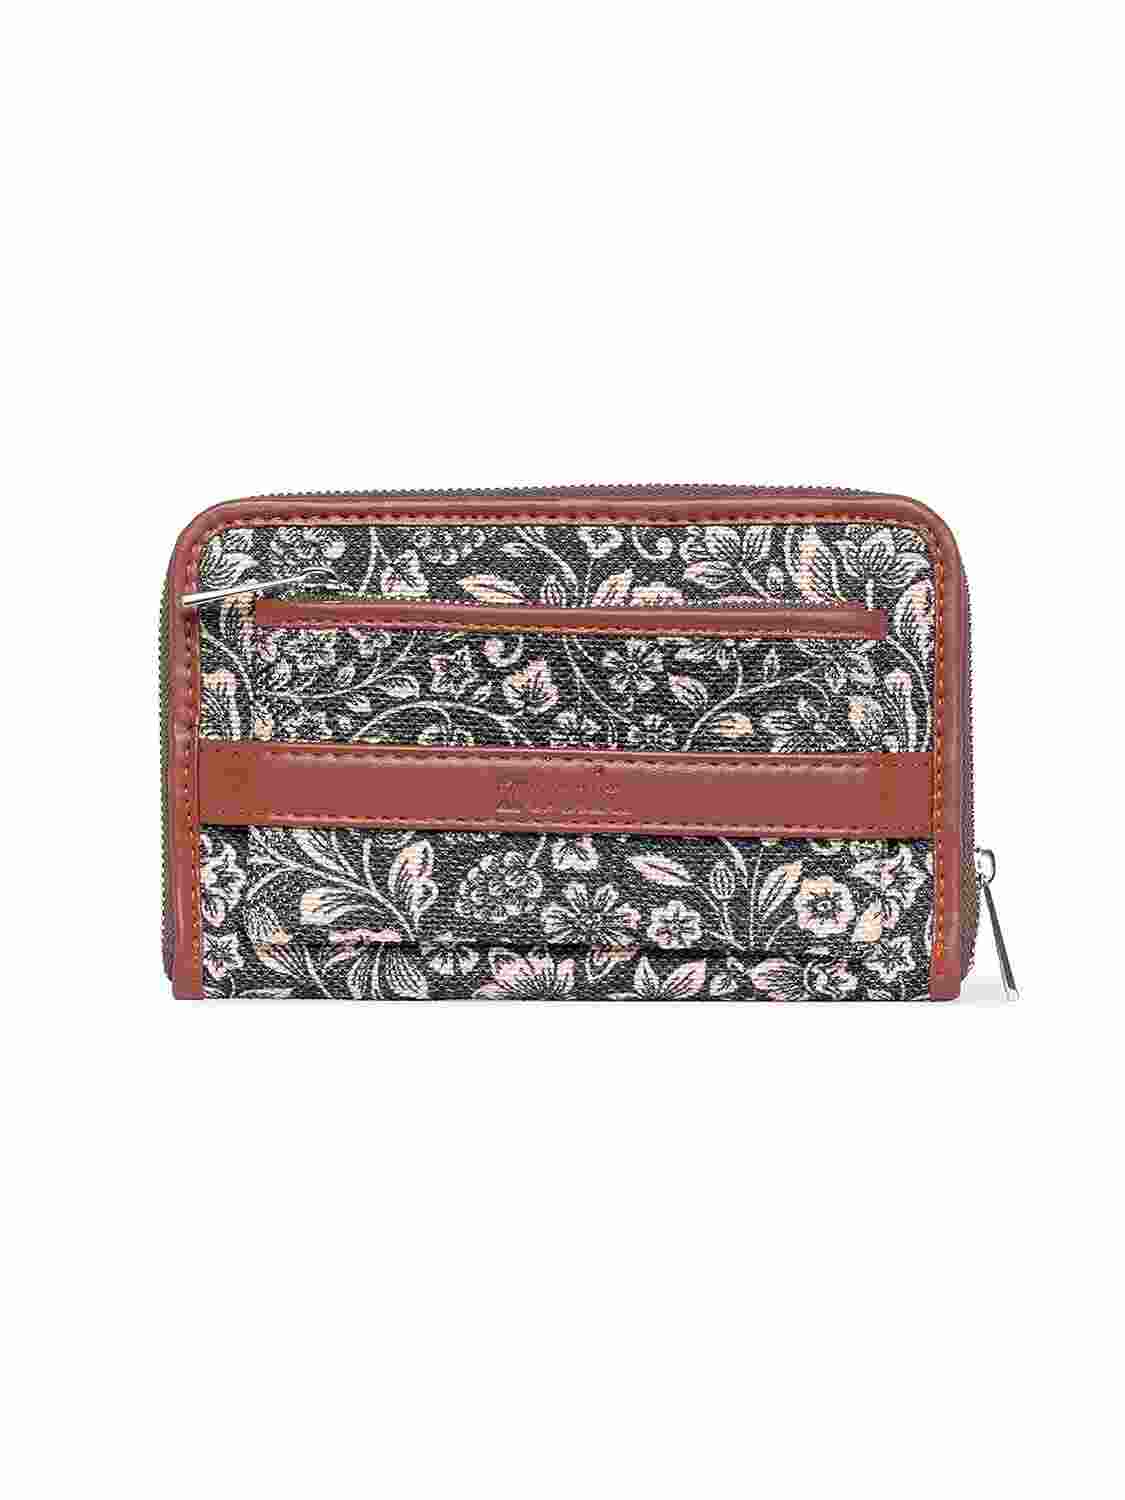 Classic women wallet bag - Fabric Vegan Leather and Jute with Mobile Phone Pocket FloMotif Print Handmade